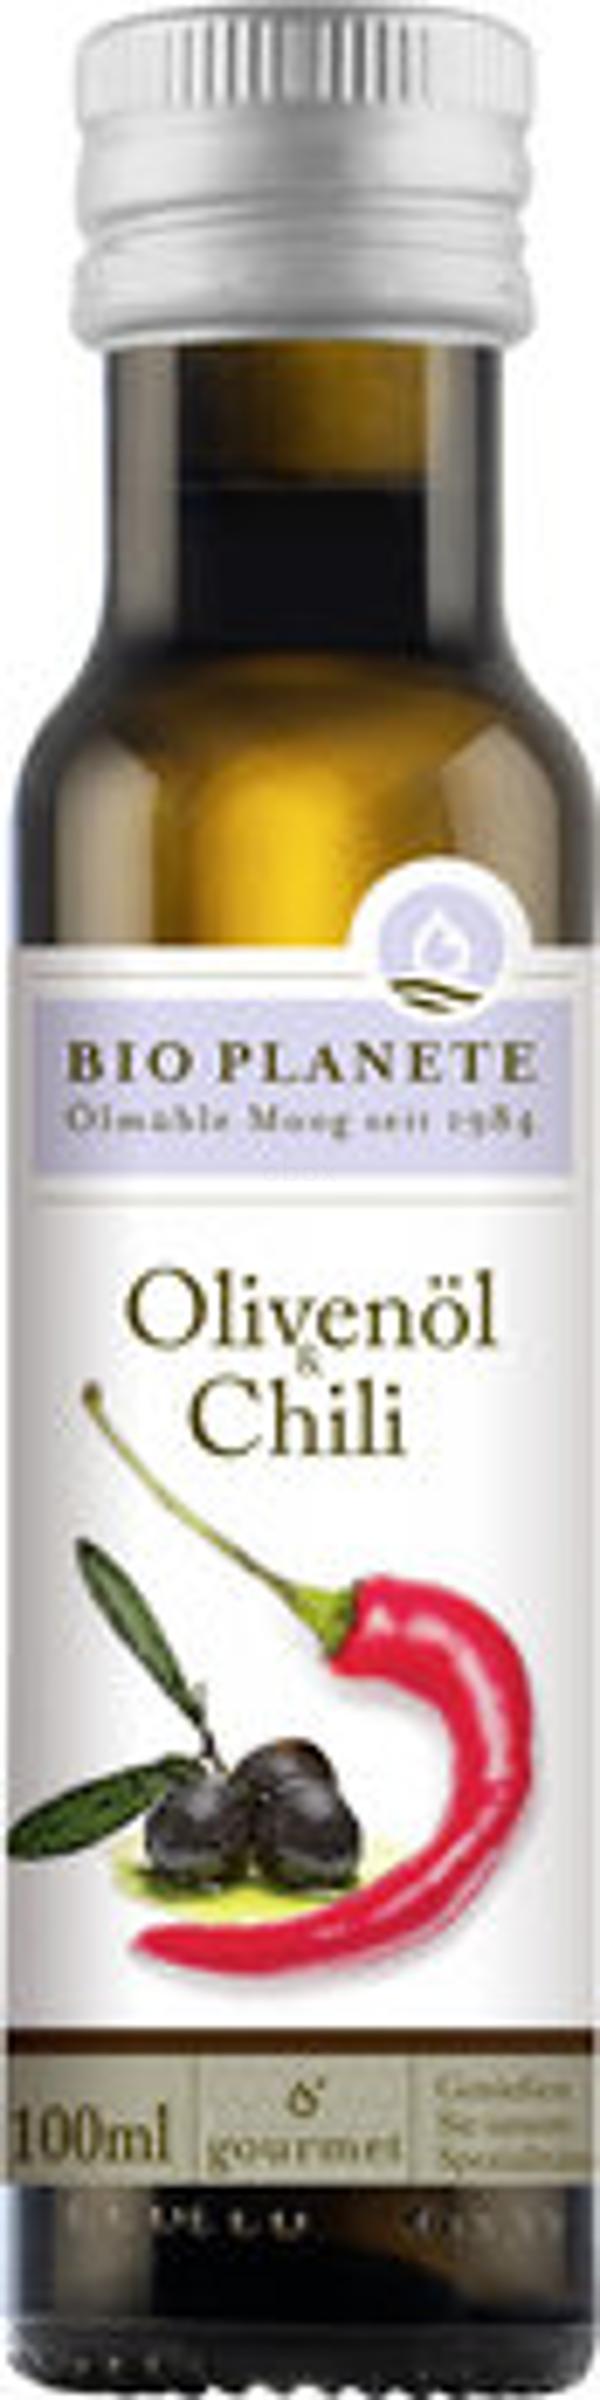 Produktfoto zu Olivenöl Chili 150ml